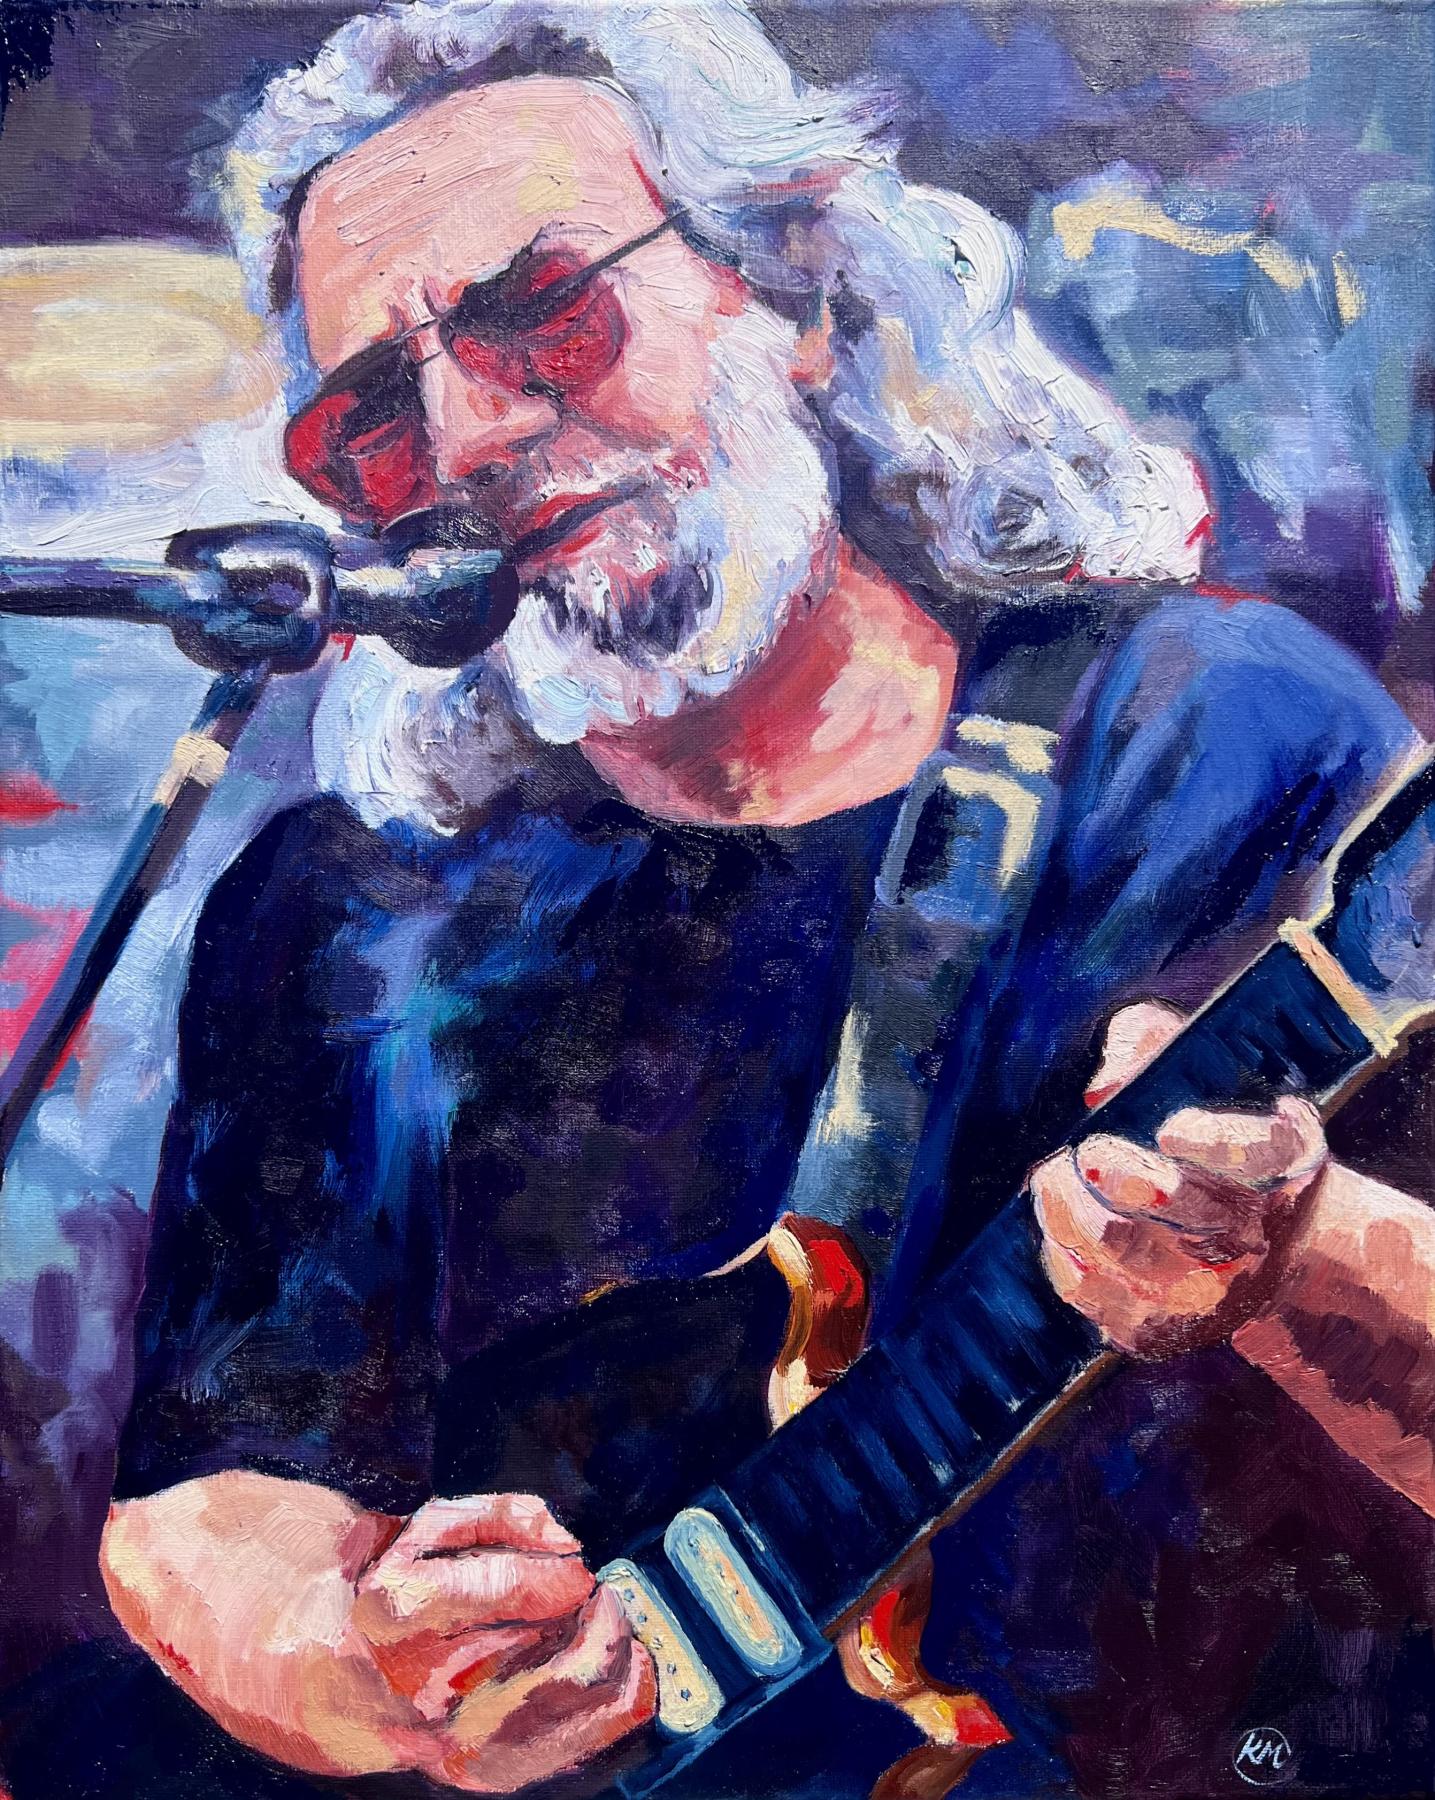 Jerry Garcia on Guitar